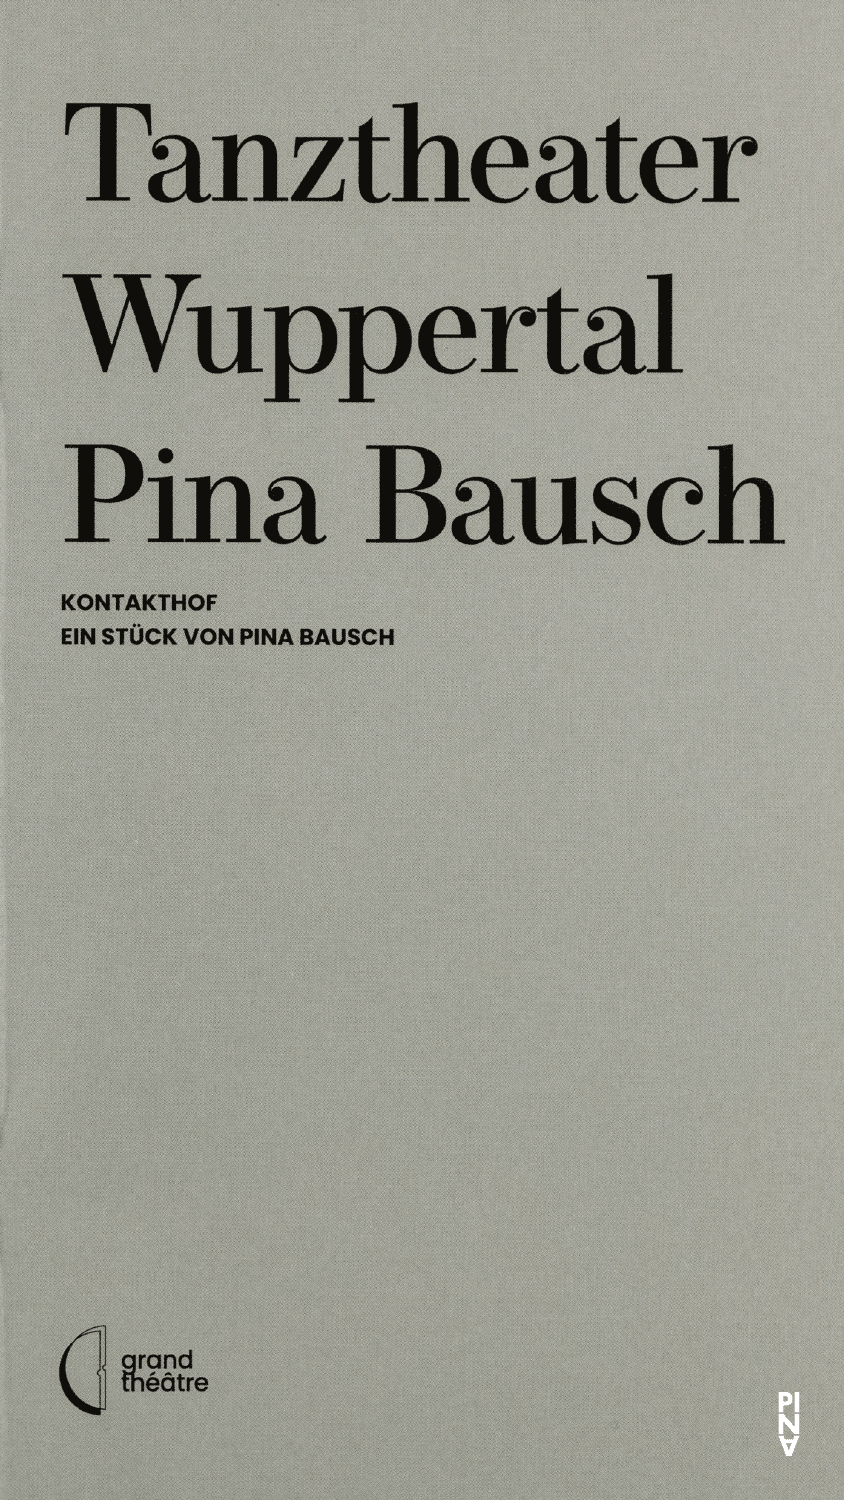 Programme pour « Kontakthof » de Pina Bausch avec Tanztheater Wuppertal à Luxembourg, 2 déc. 2021 – 5 déc. 2021